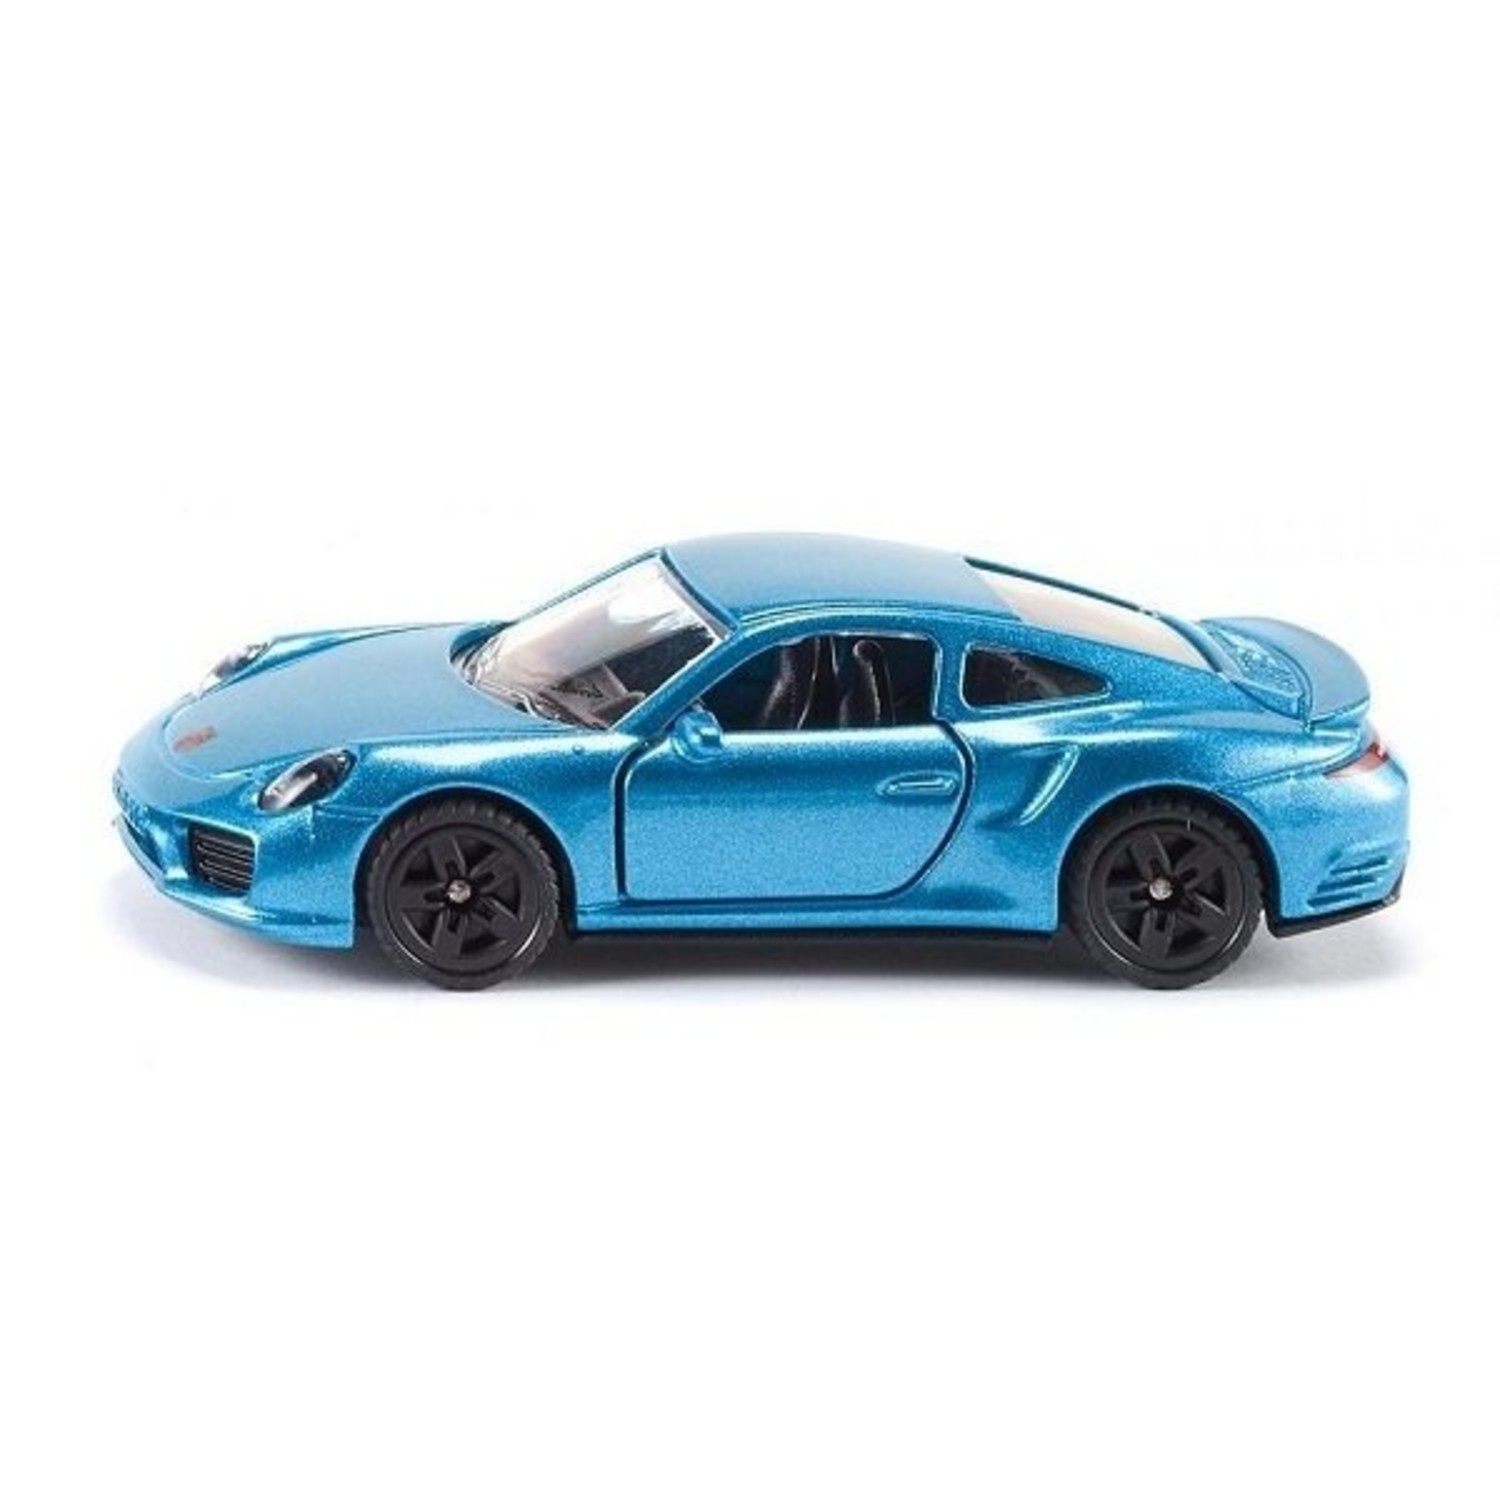 composiet Barry duizend SIKU Speelgoedauto - Porsche 911 Turbo S blauw (1506) - JUTTER & Co.